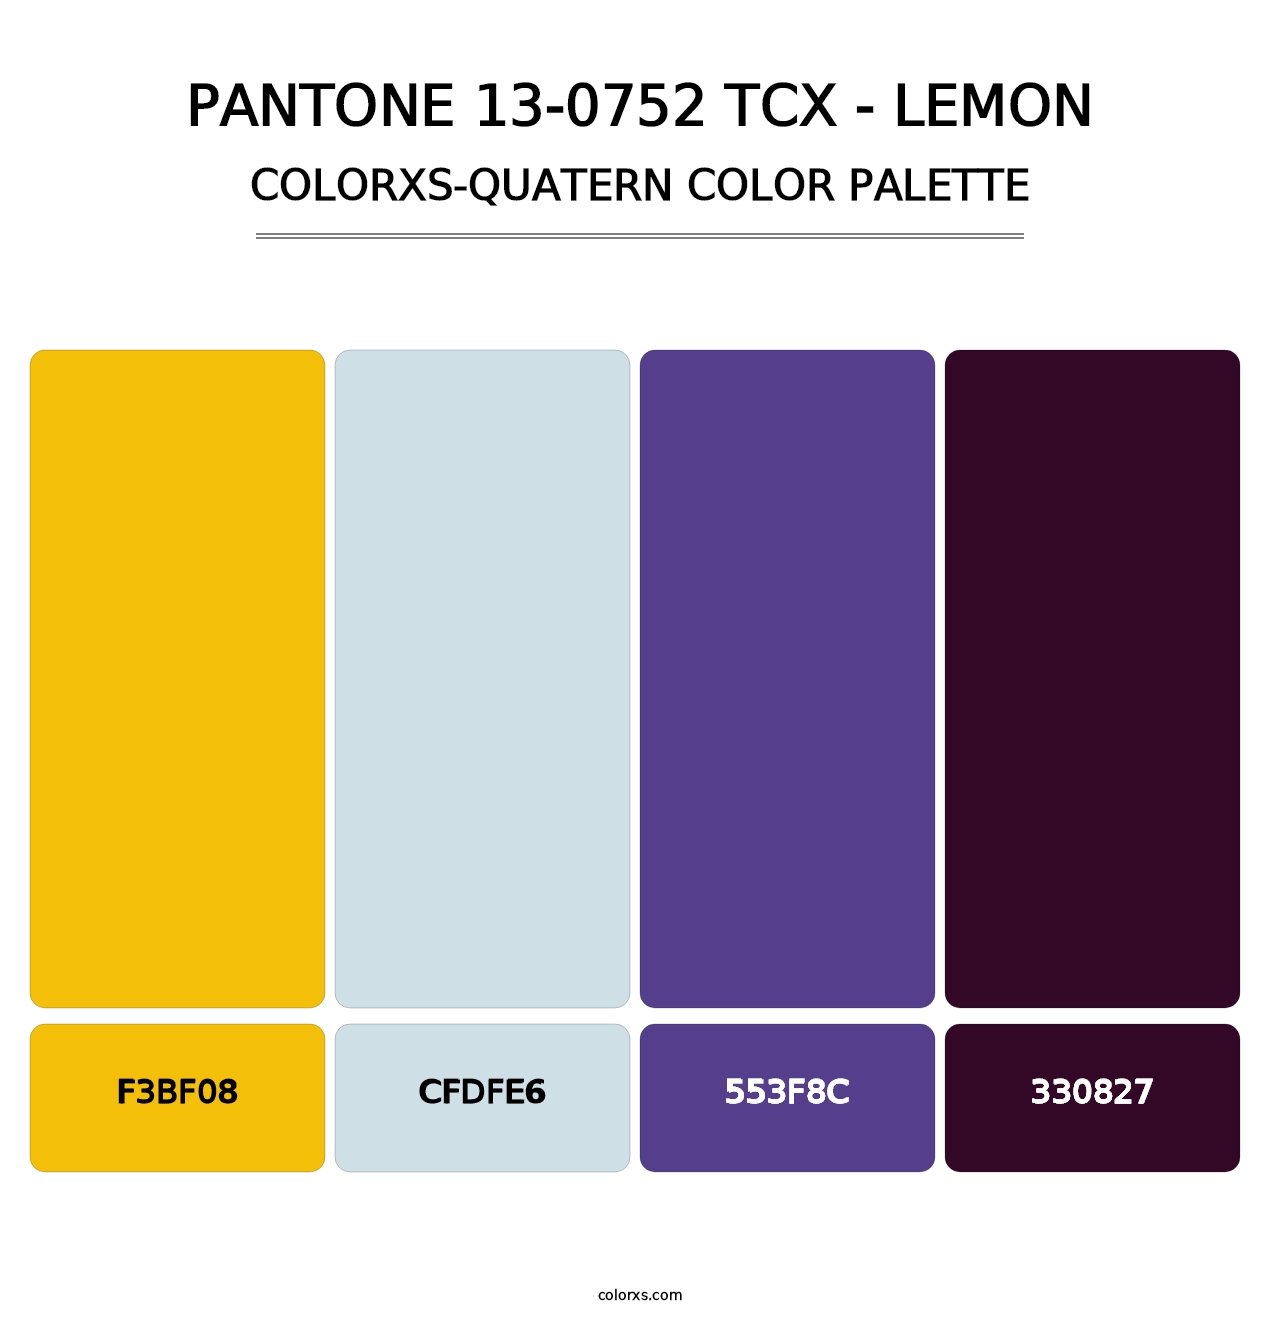 PANTONE 13-0752 TCX - Lemon - Colorxs Quatern Palette